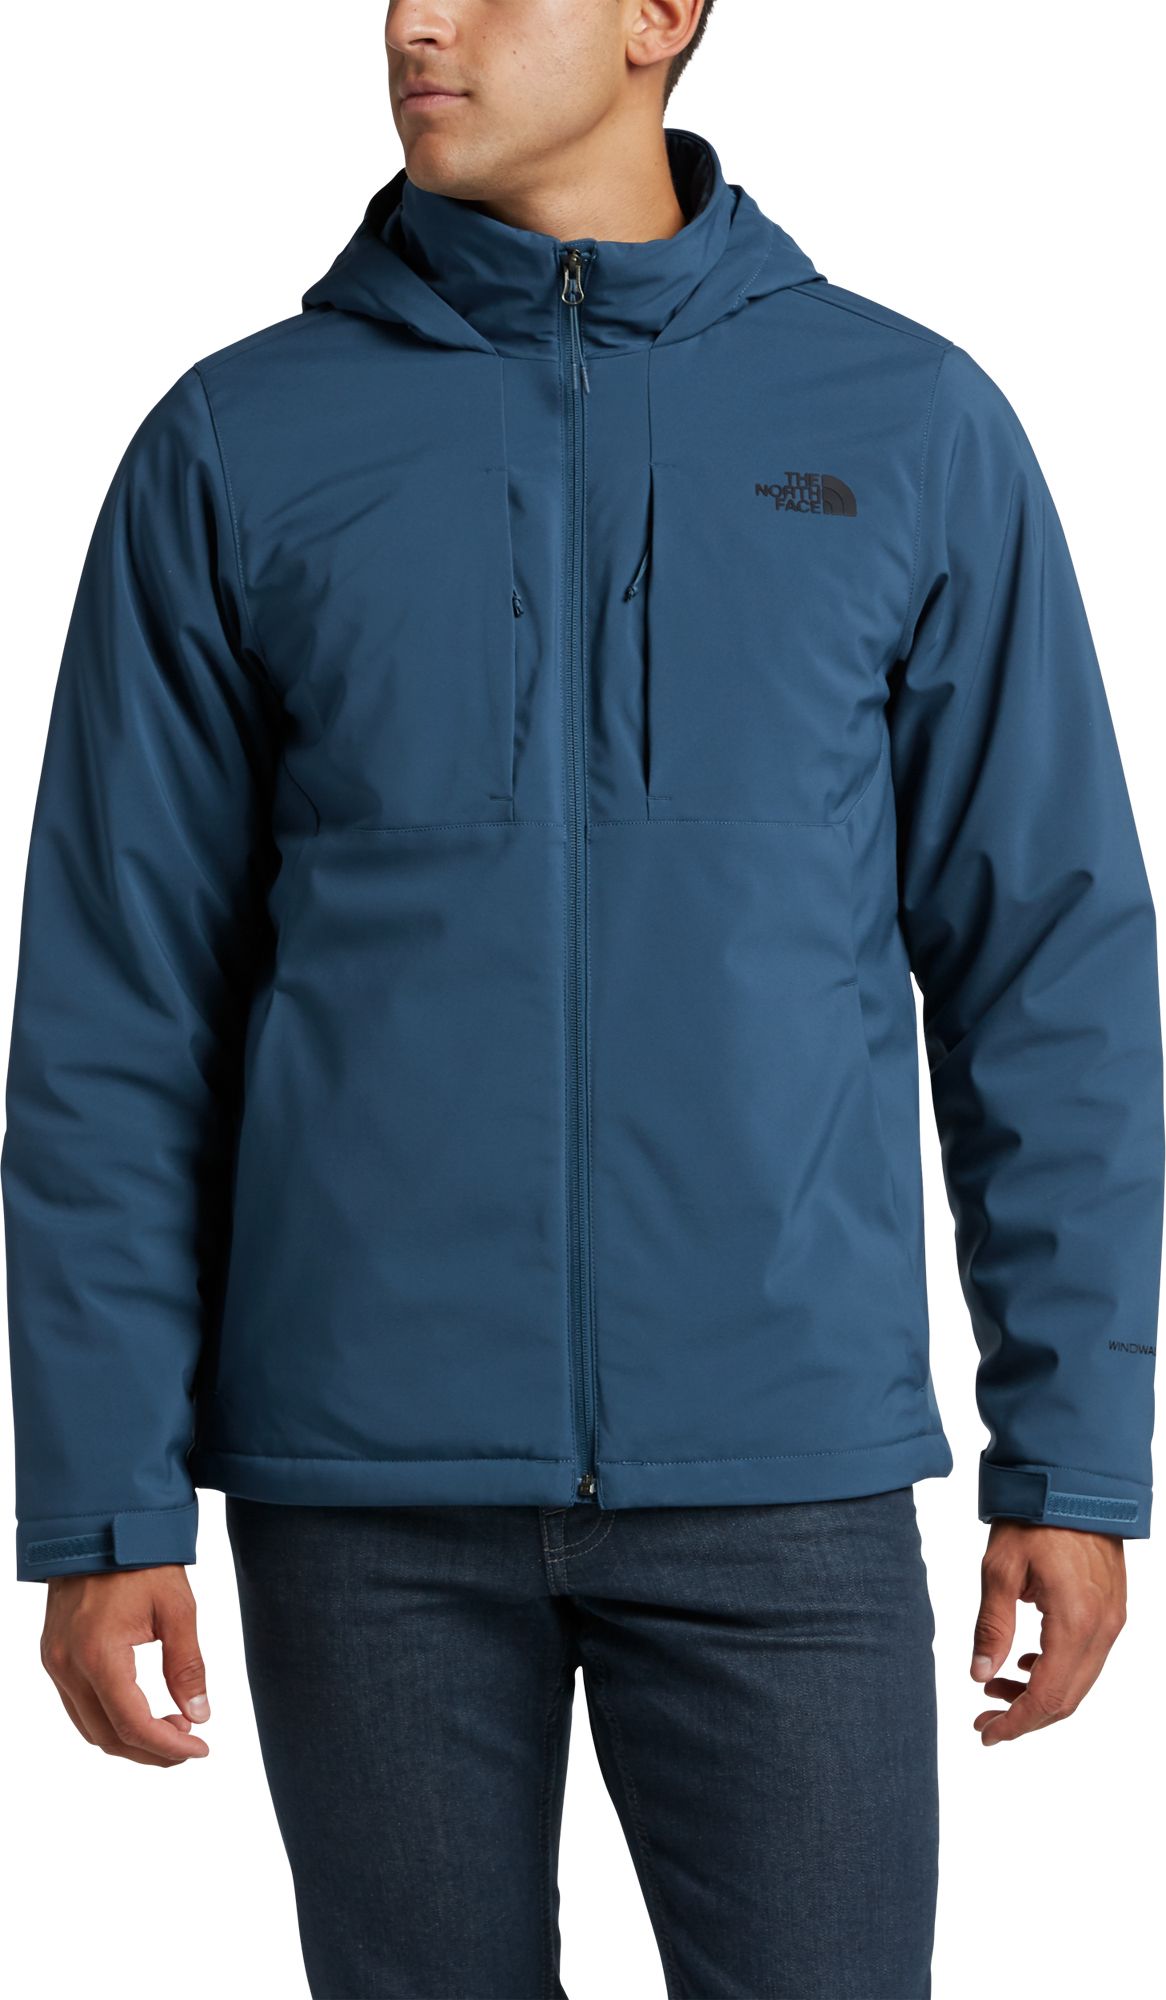 m apex elevation jacket